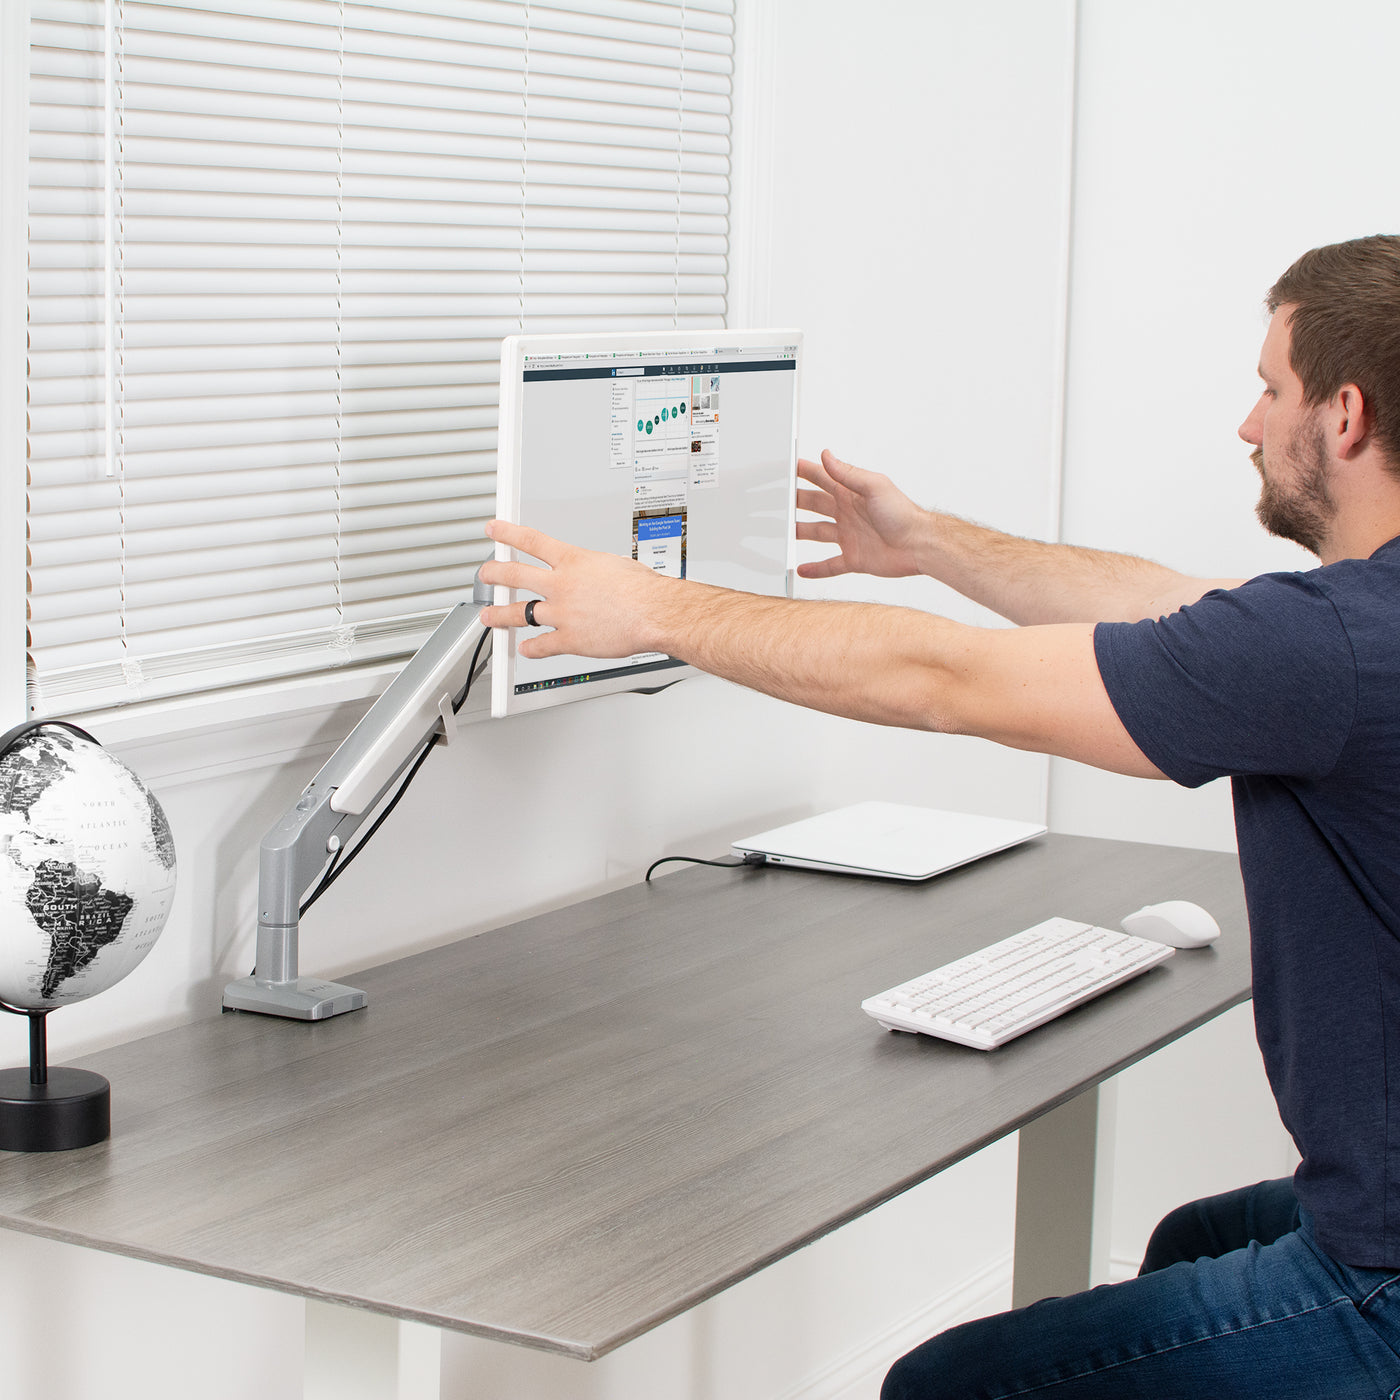 Silver Pneumatic Arm Single Monitor Desk Mount